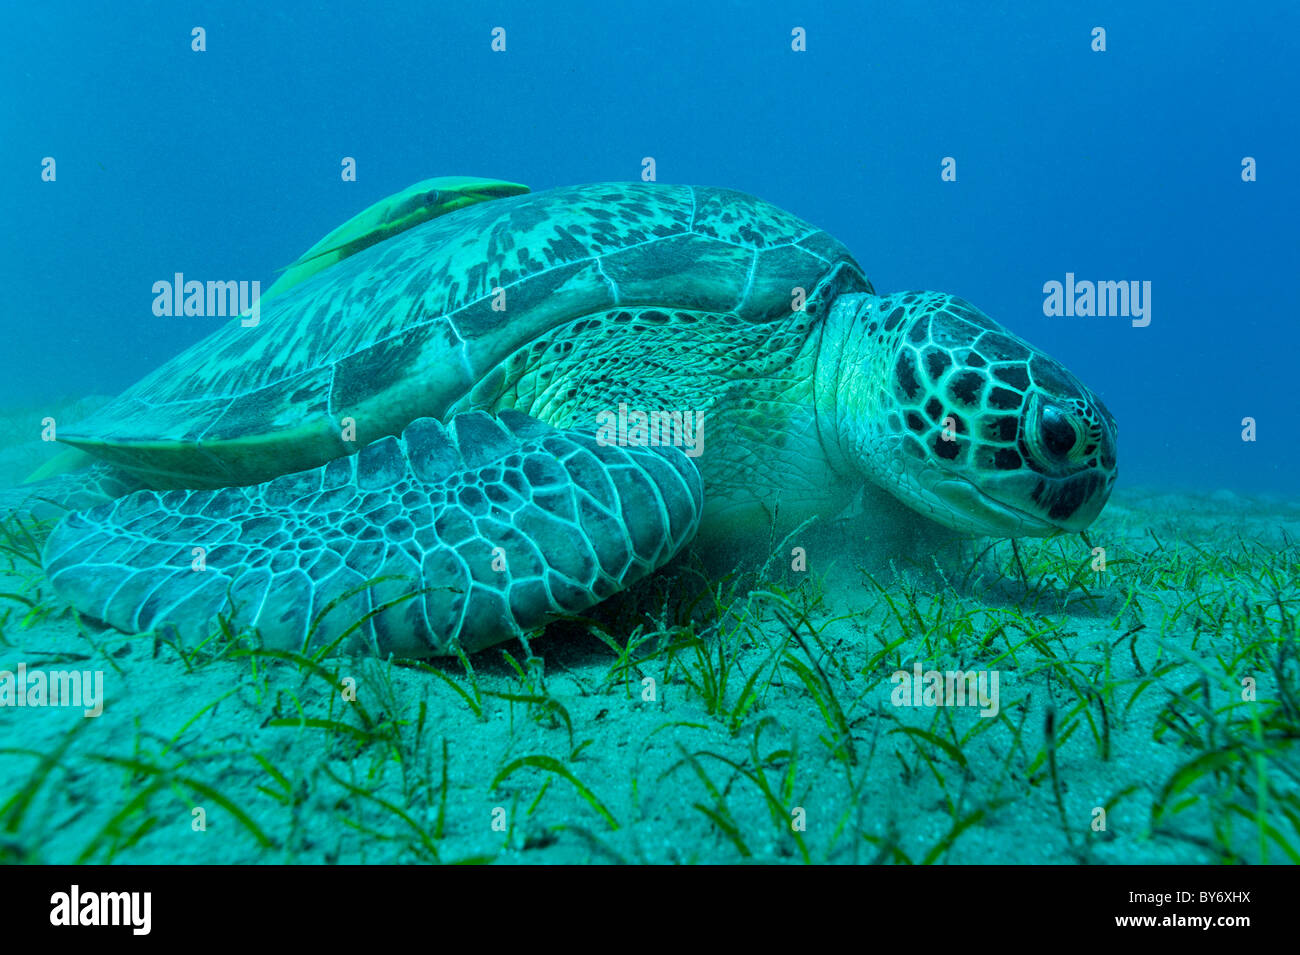 Green Turtle, Chelonia mydas, Green Sea Turtle, Suppenschildkröte, Abu Dabab, Egypt, feeding on sea grass with remora attached Stock Photo